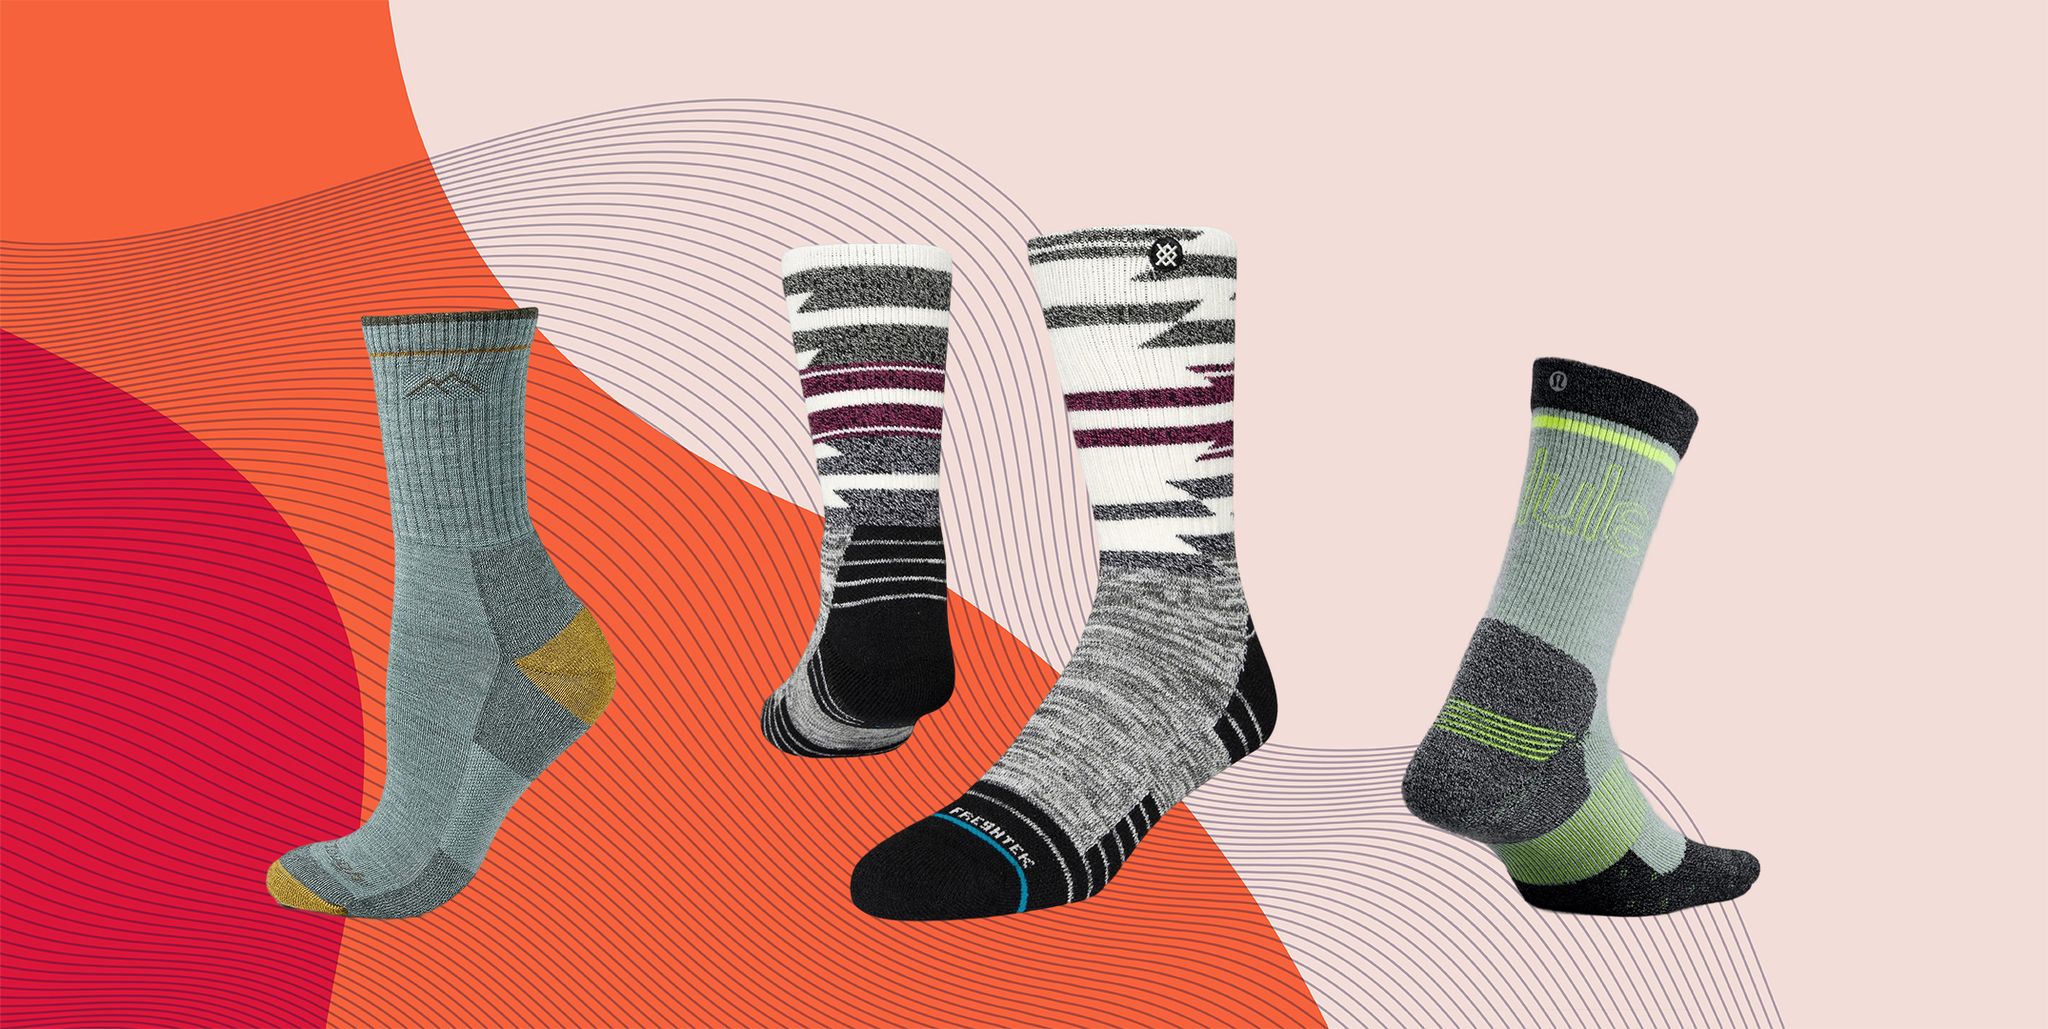 Mid Calf Hiking Socks, Made from Merino Wool